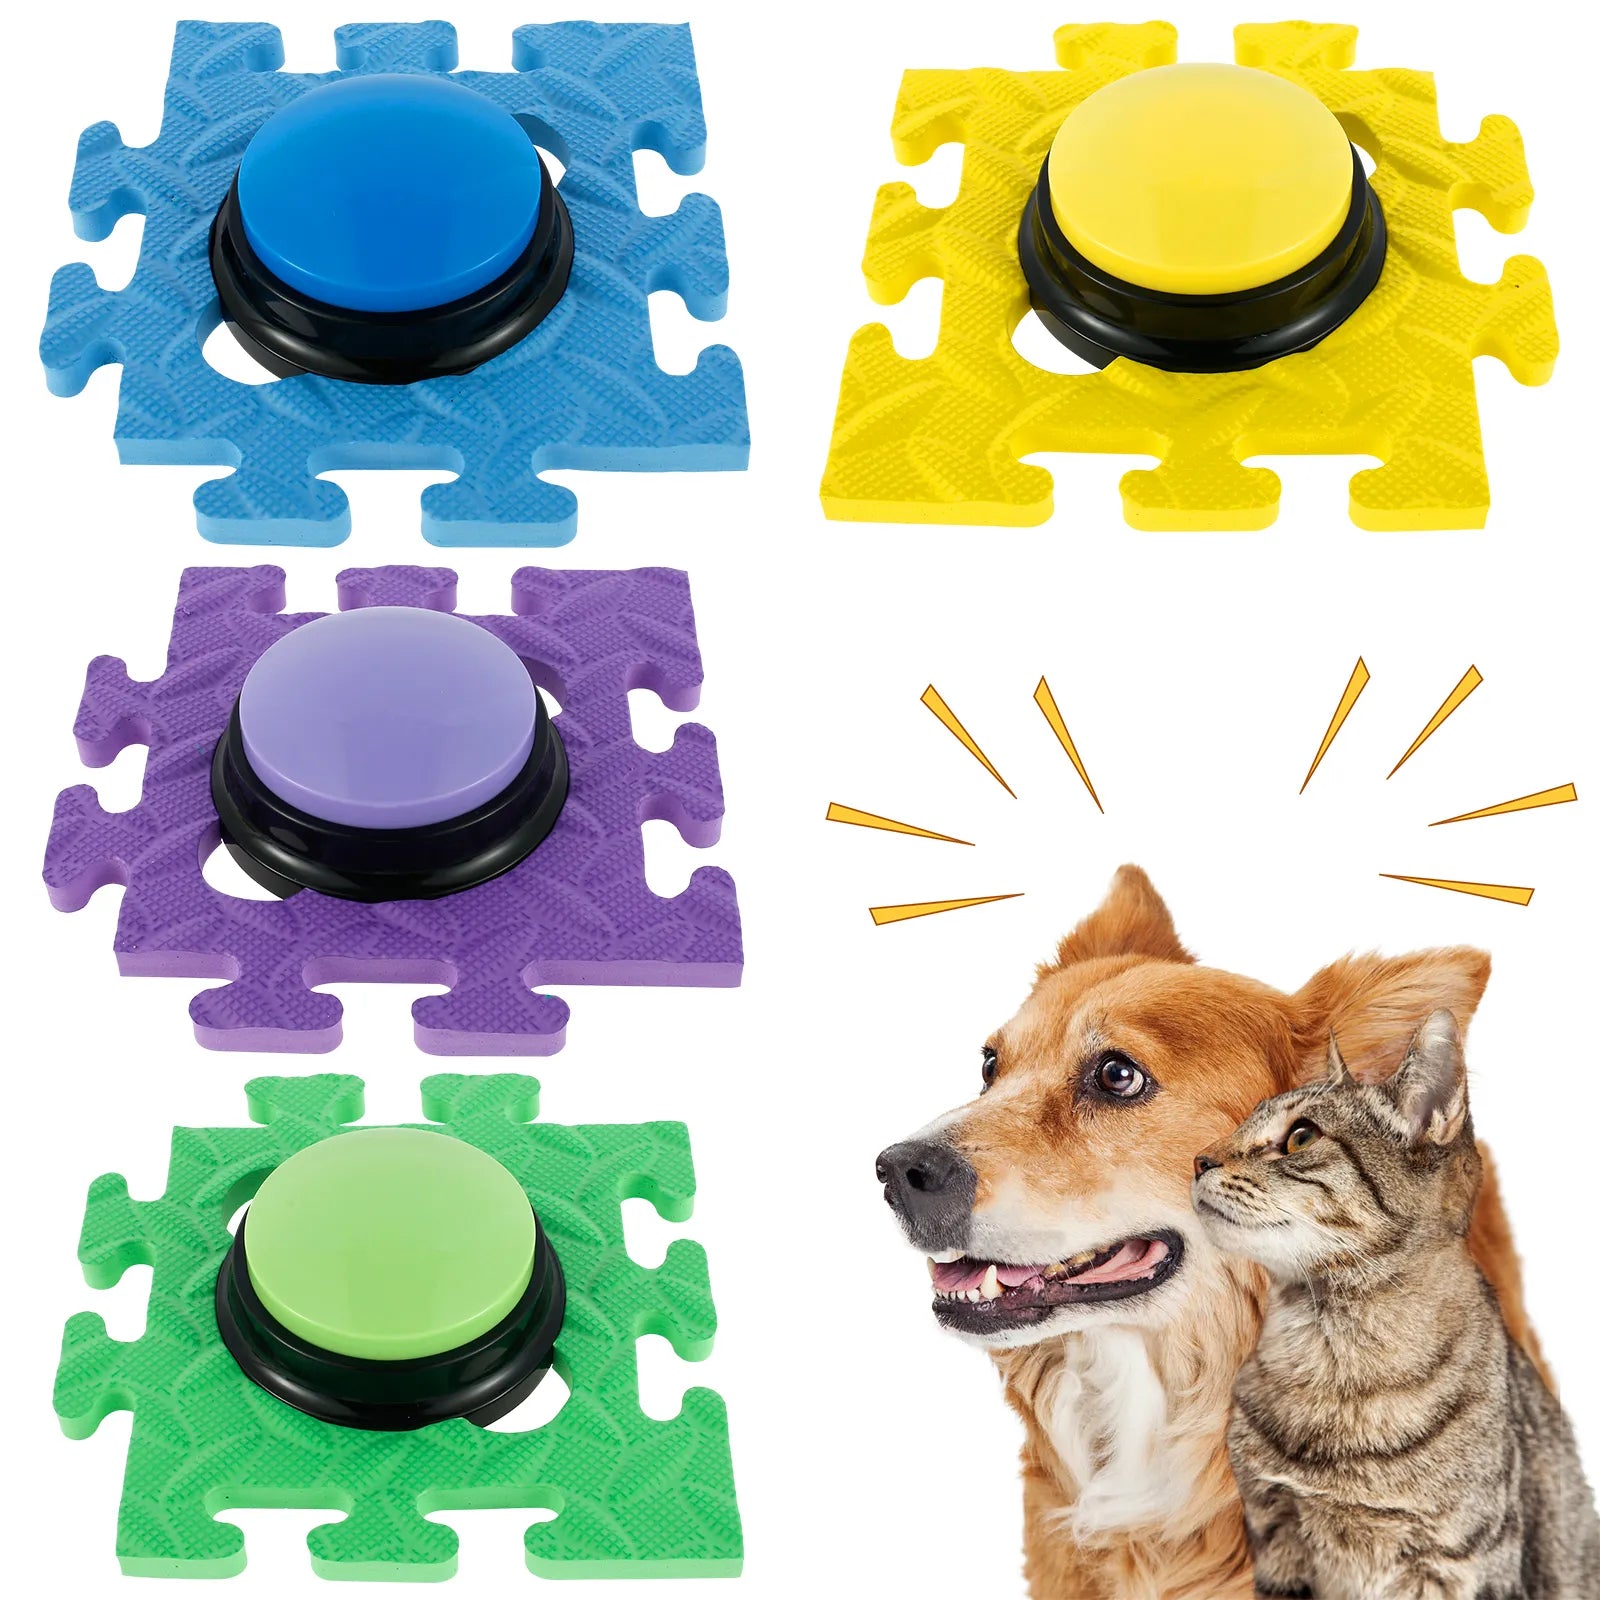 Recordable Dog Buttons - Pet Training Buzzer Set (4 France